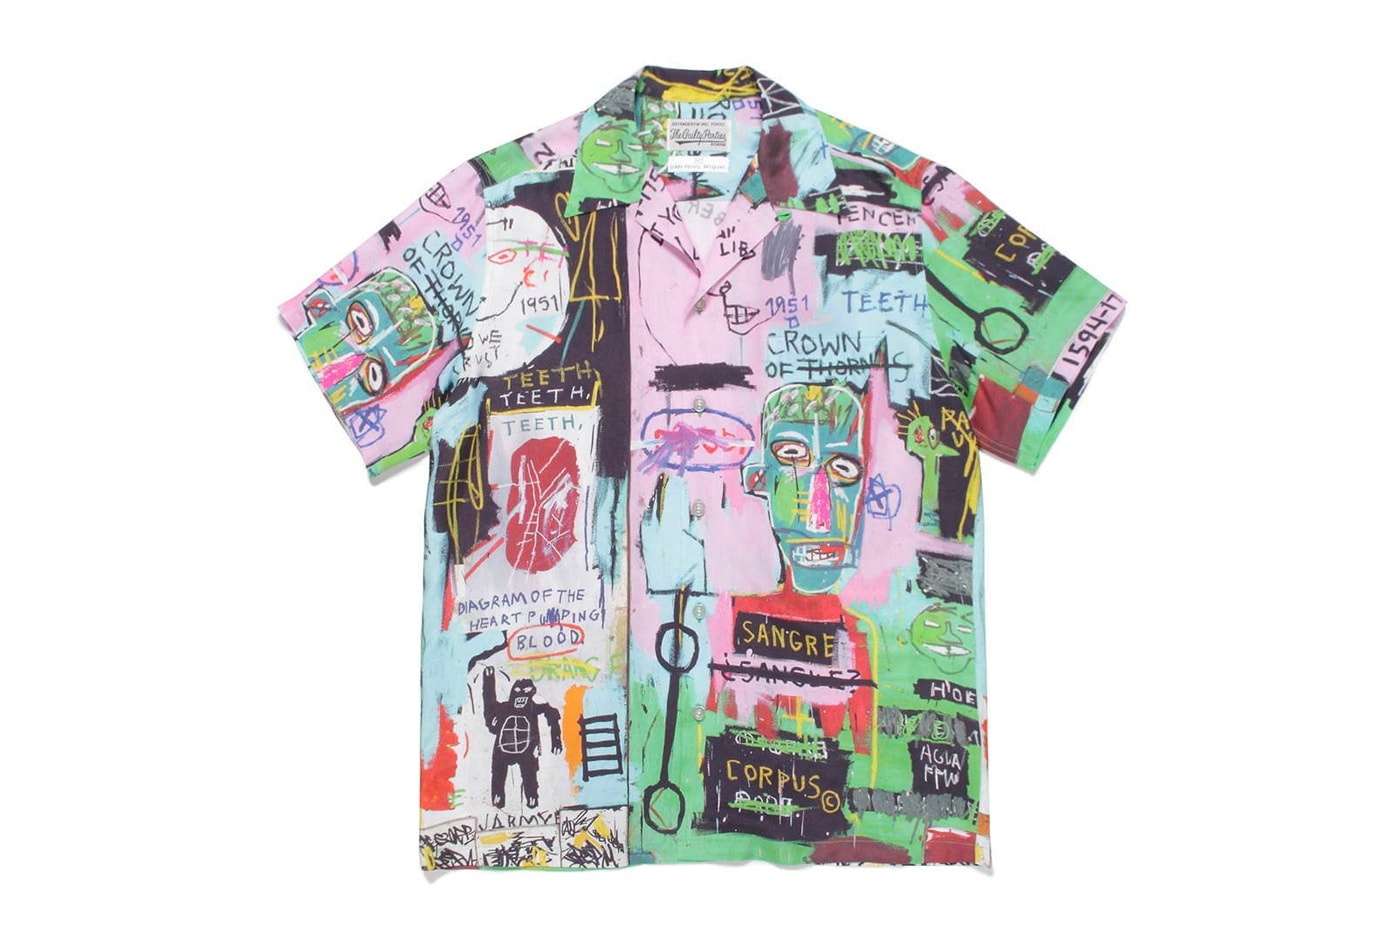 Jean Michel Basquiat WACKO MARIA Hawaiian Shirts menswear streetwear spring summer 2020 collection button ups short sleeves In Italian 1983  untitled 1984 Three Kings painting collaborations japanese designer 